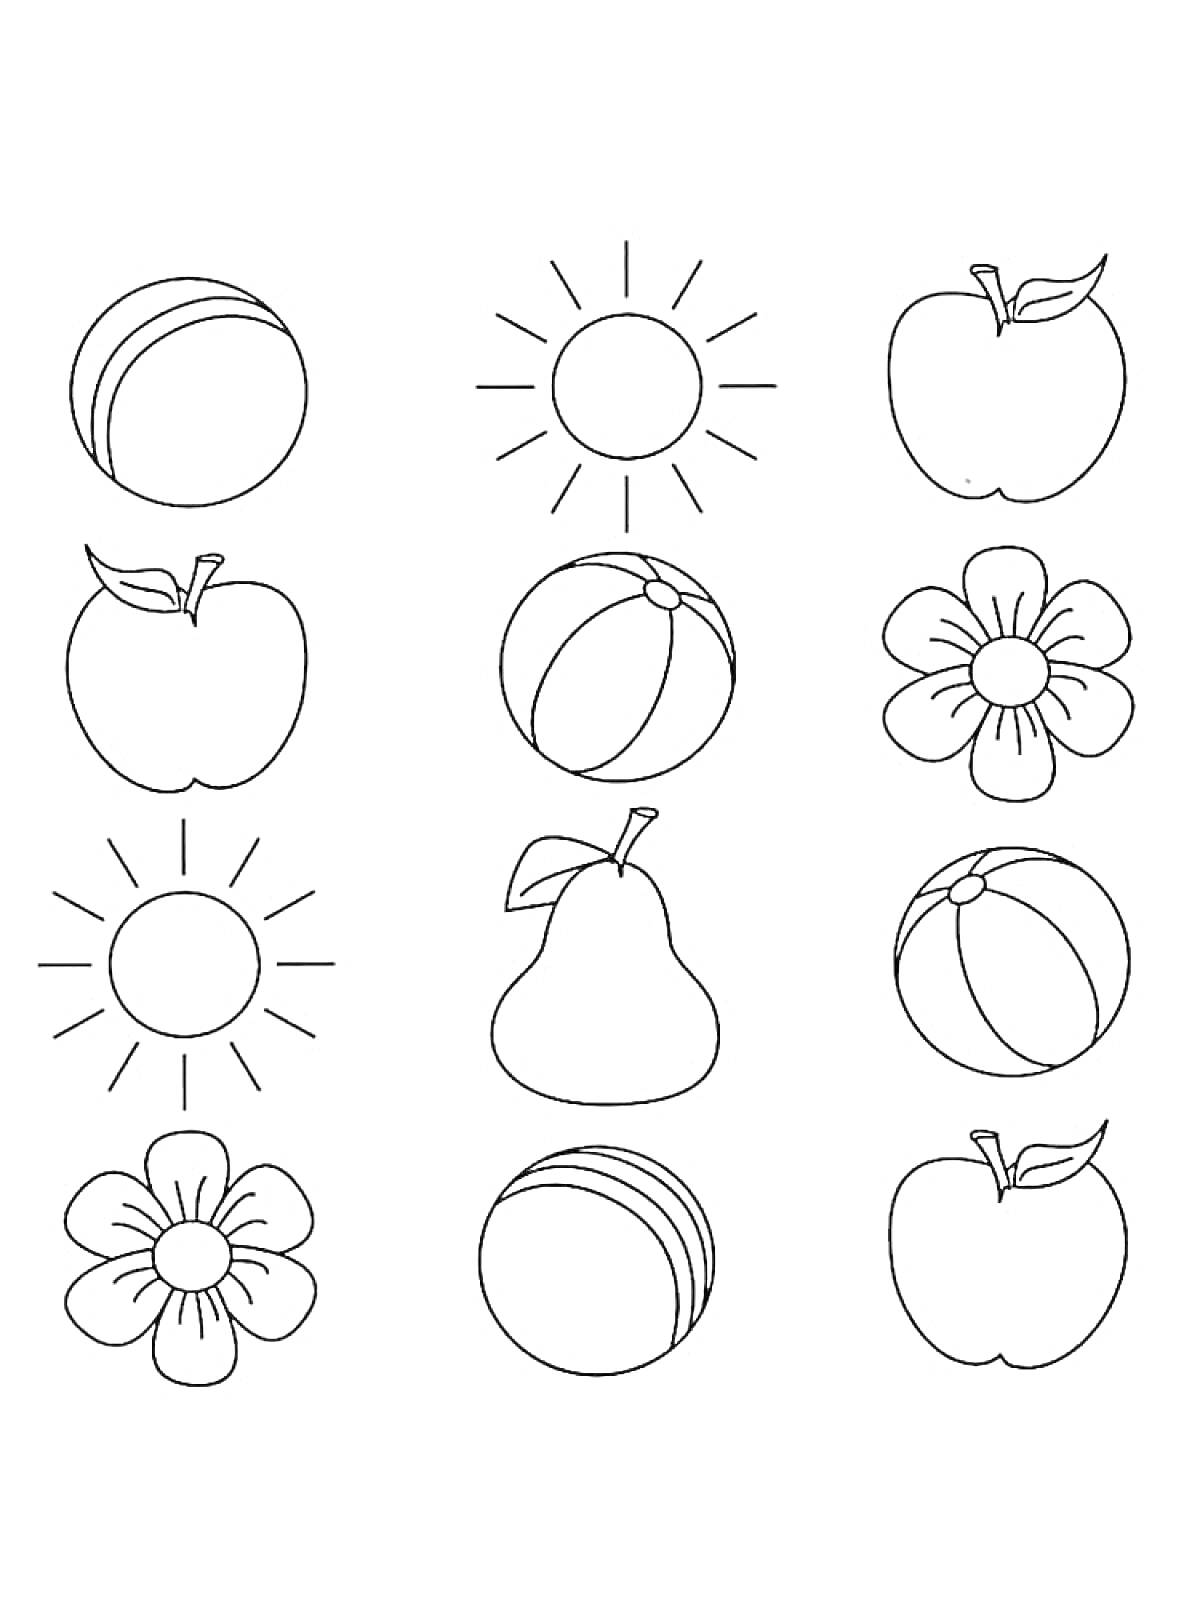 Раскраска Фрукты, цветы и солнце (груша, яблоко, мяч, цветок, солнце)